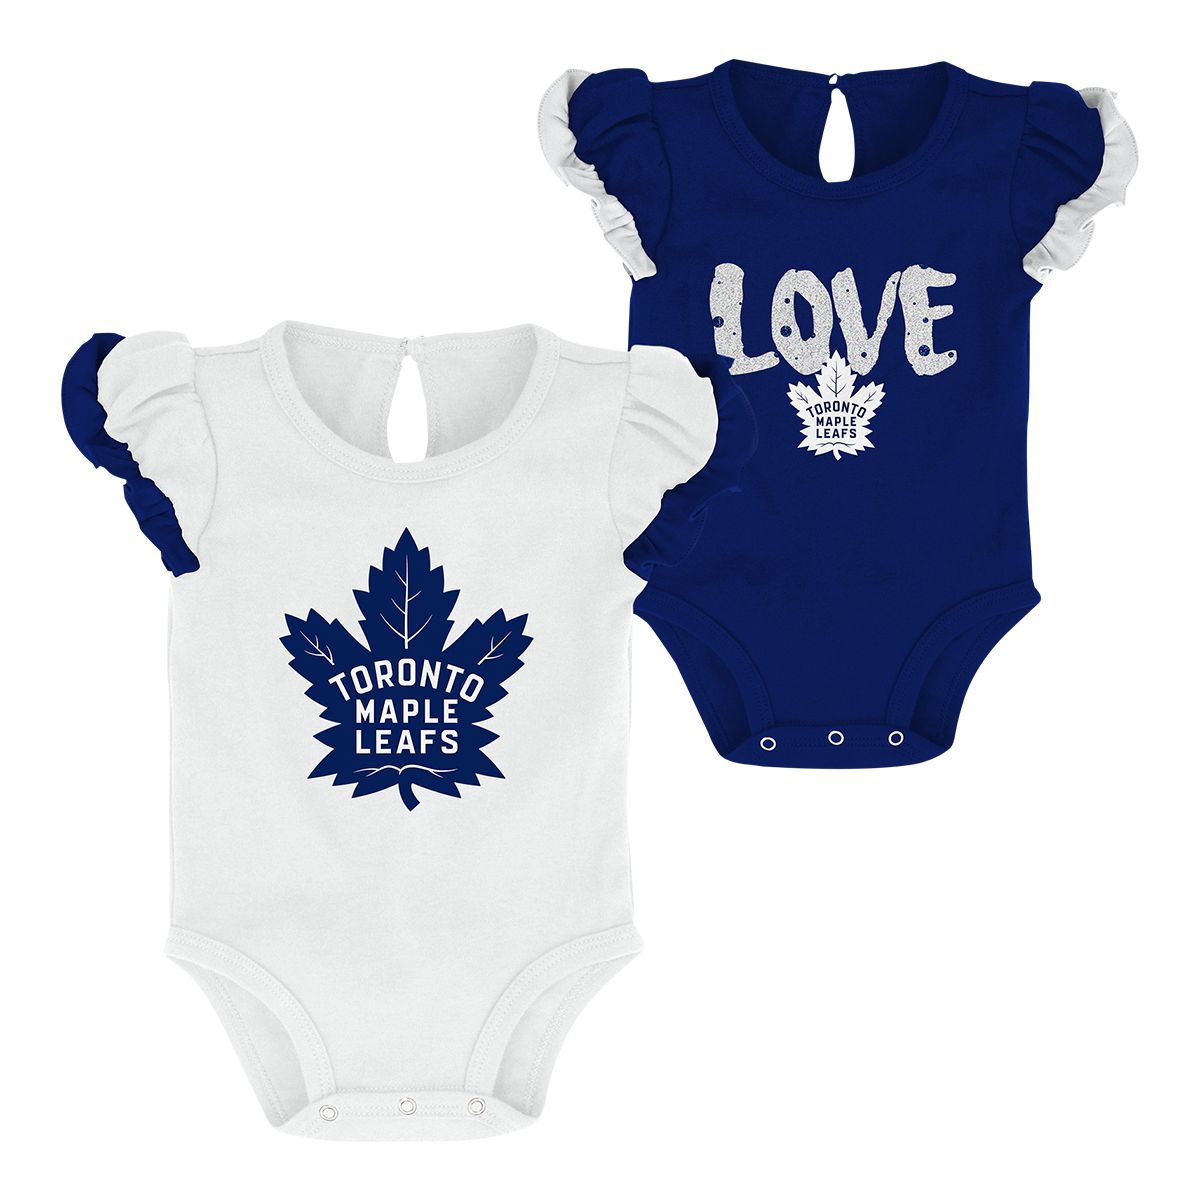 Toronto Maple Leafs Infant Jersey